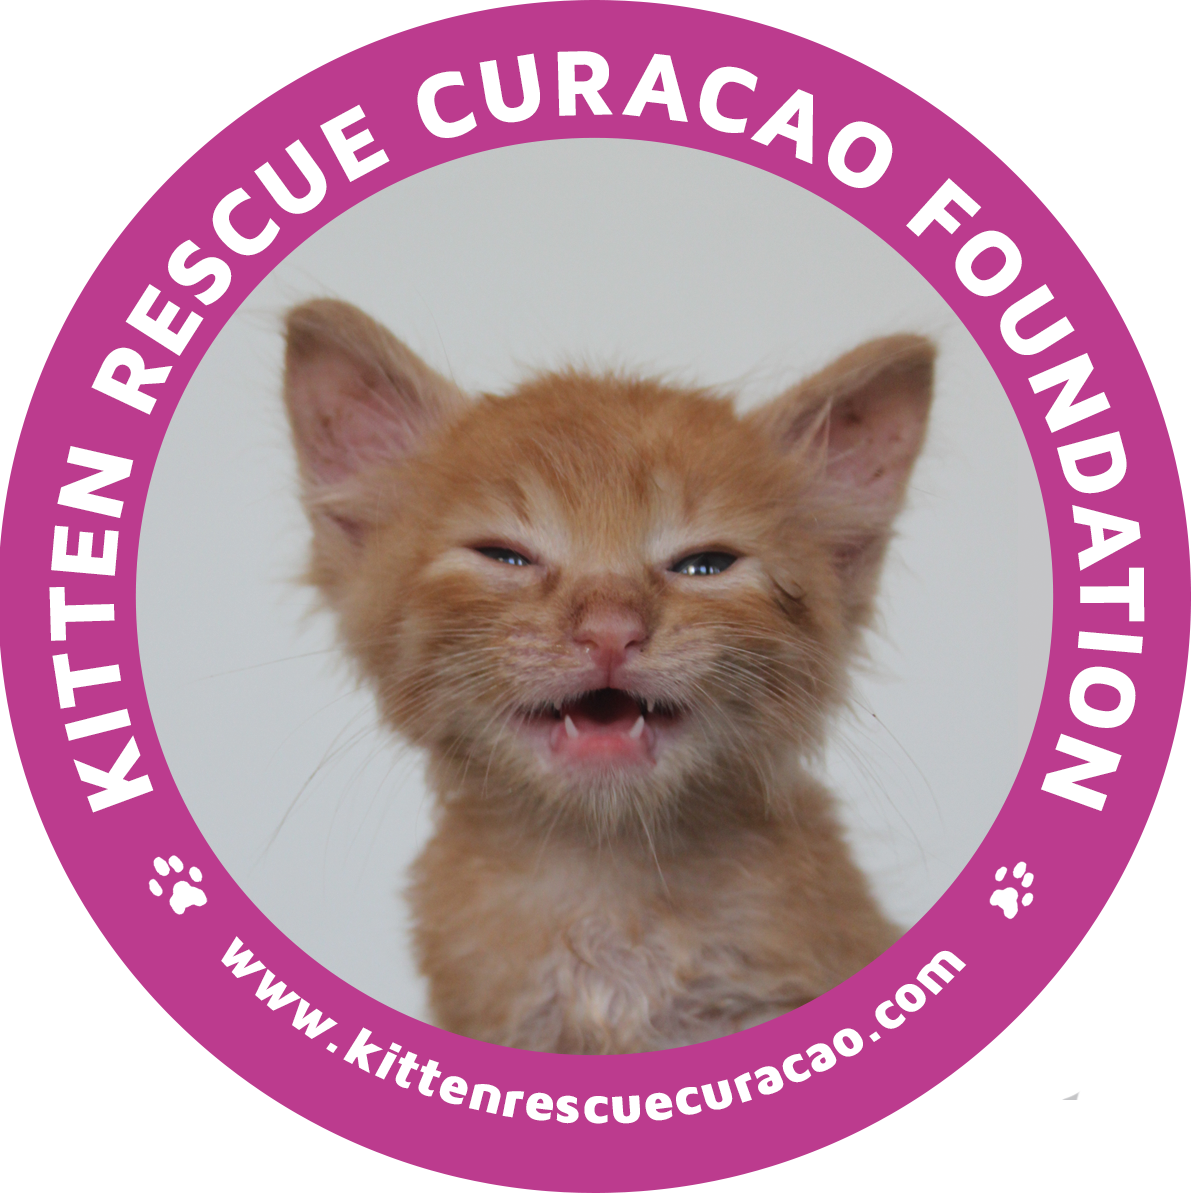 Stichting Kitten Rescue Curacao logo